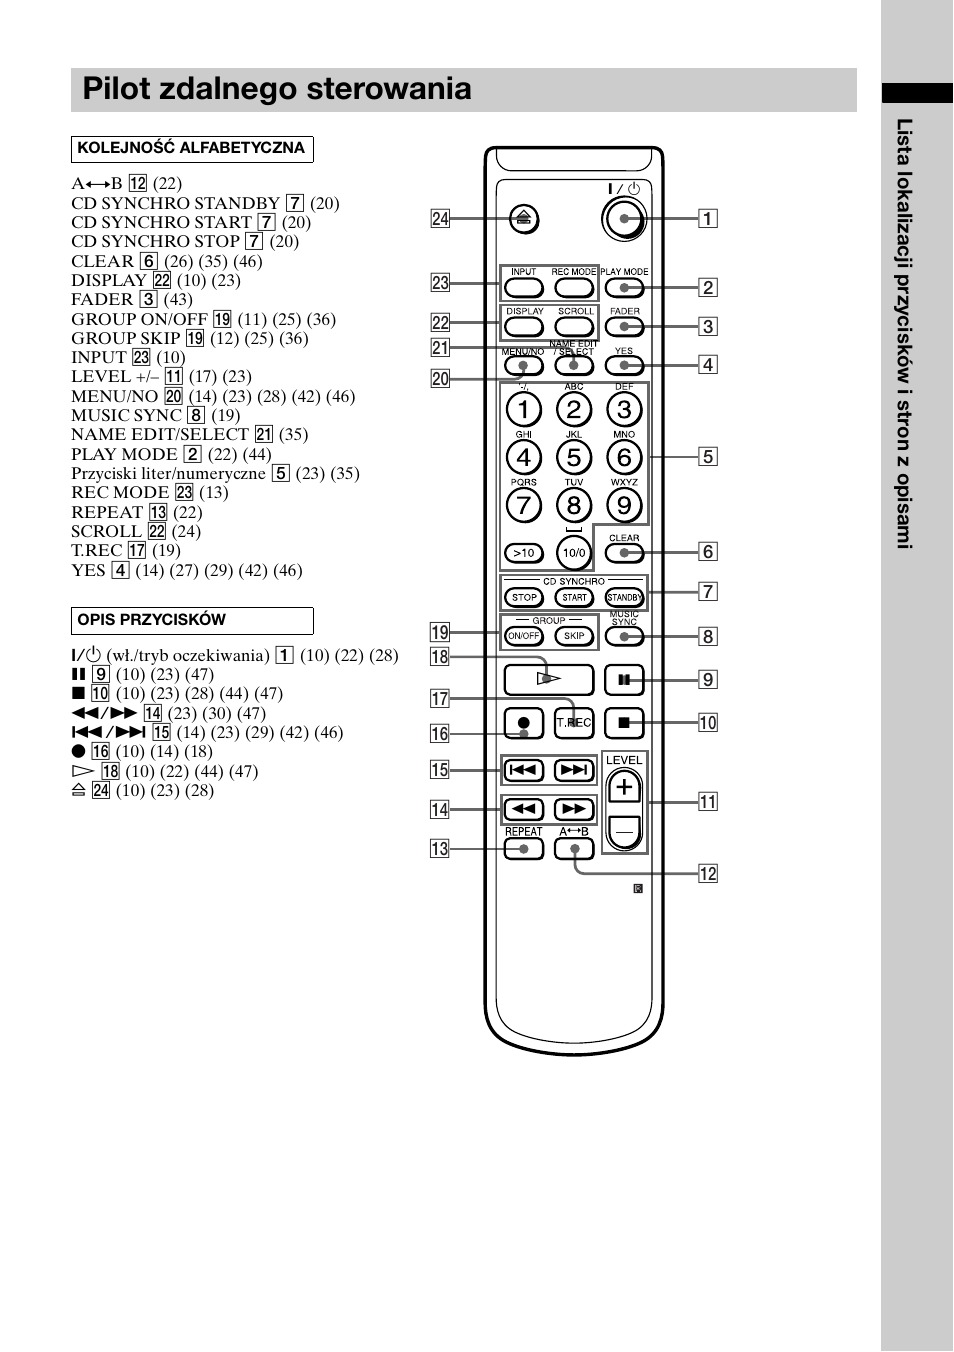 Pilot zdalnego sterowania | Sony MDS-JE780 Manuale d'uso | Pagina 59 / 112